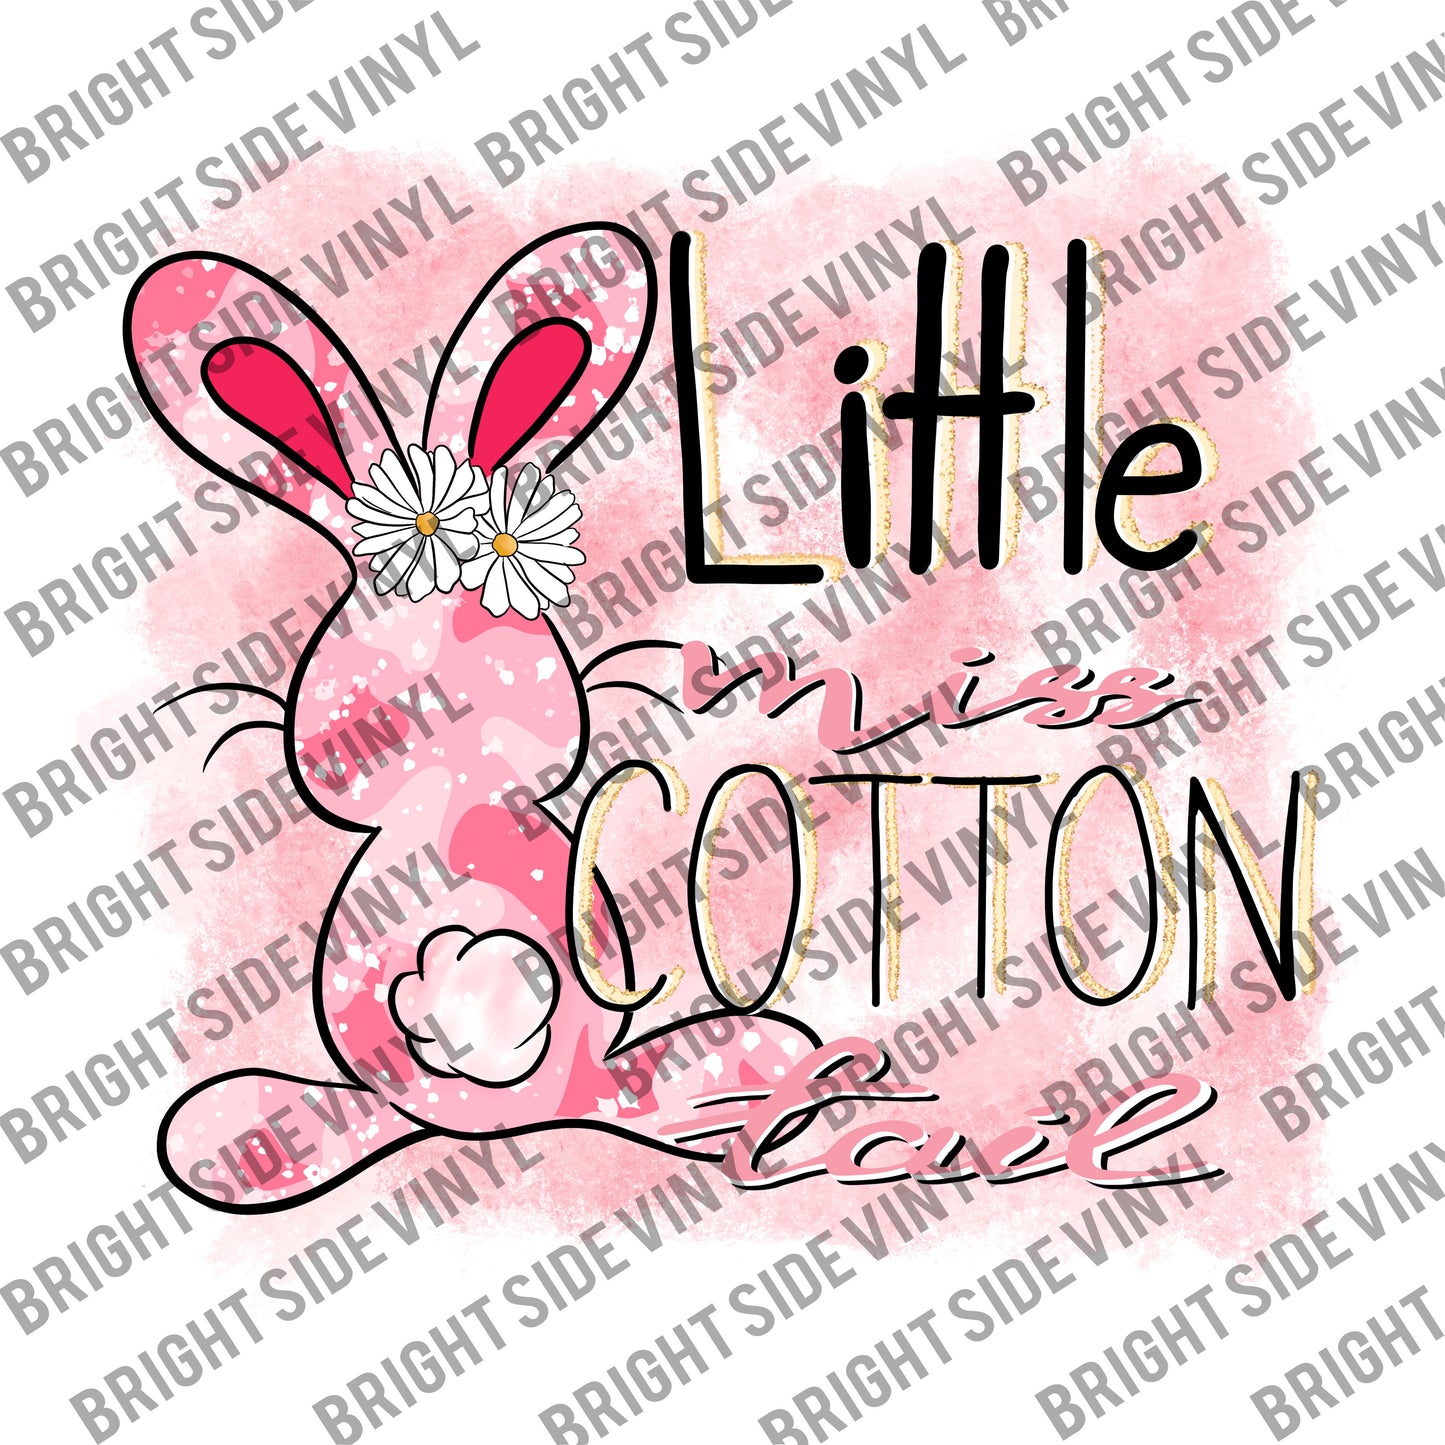 Little Miss Cotton Tail (Sublimation Transfer)